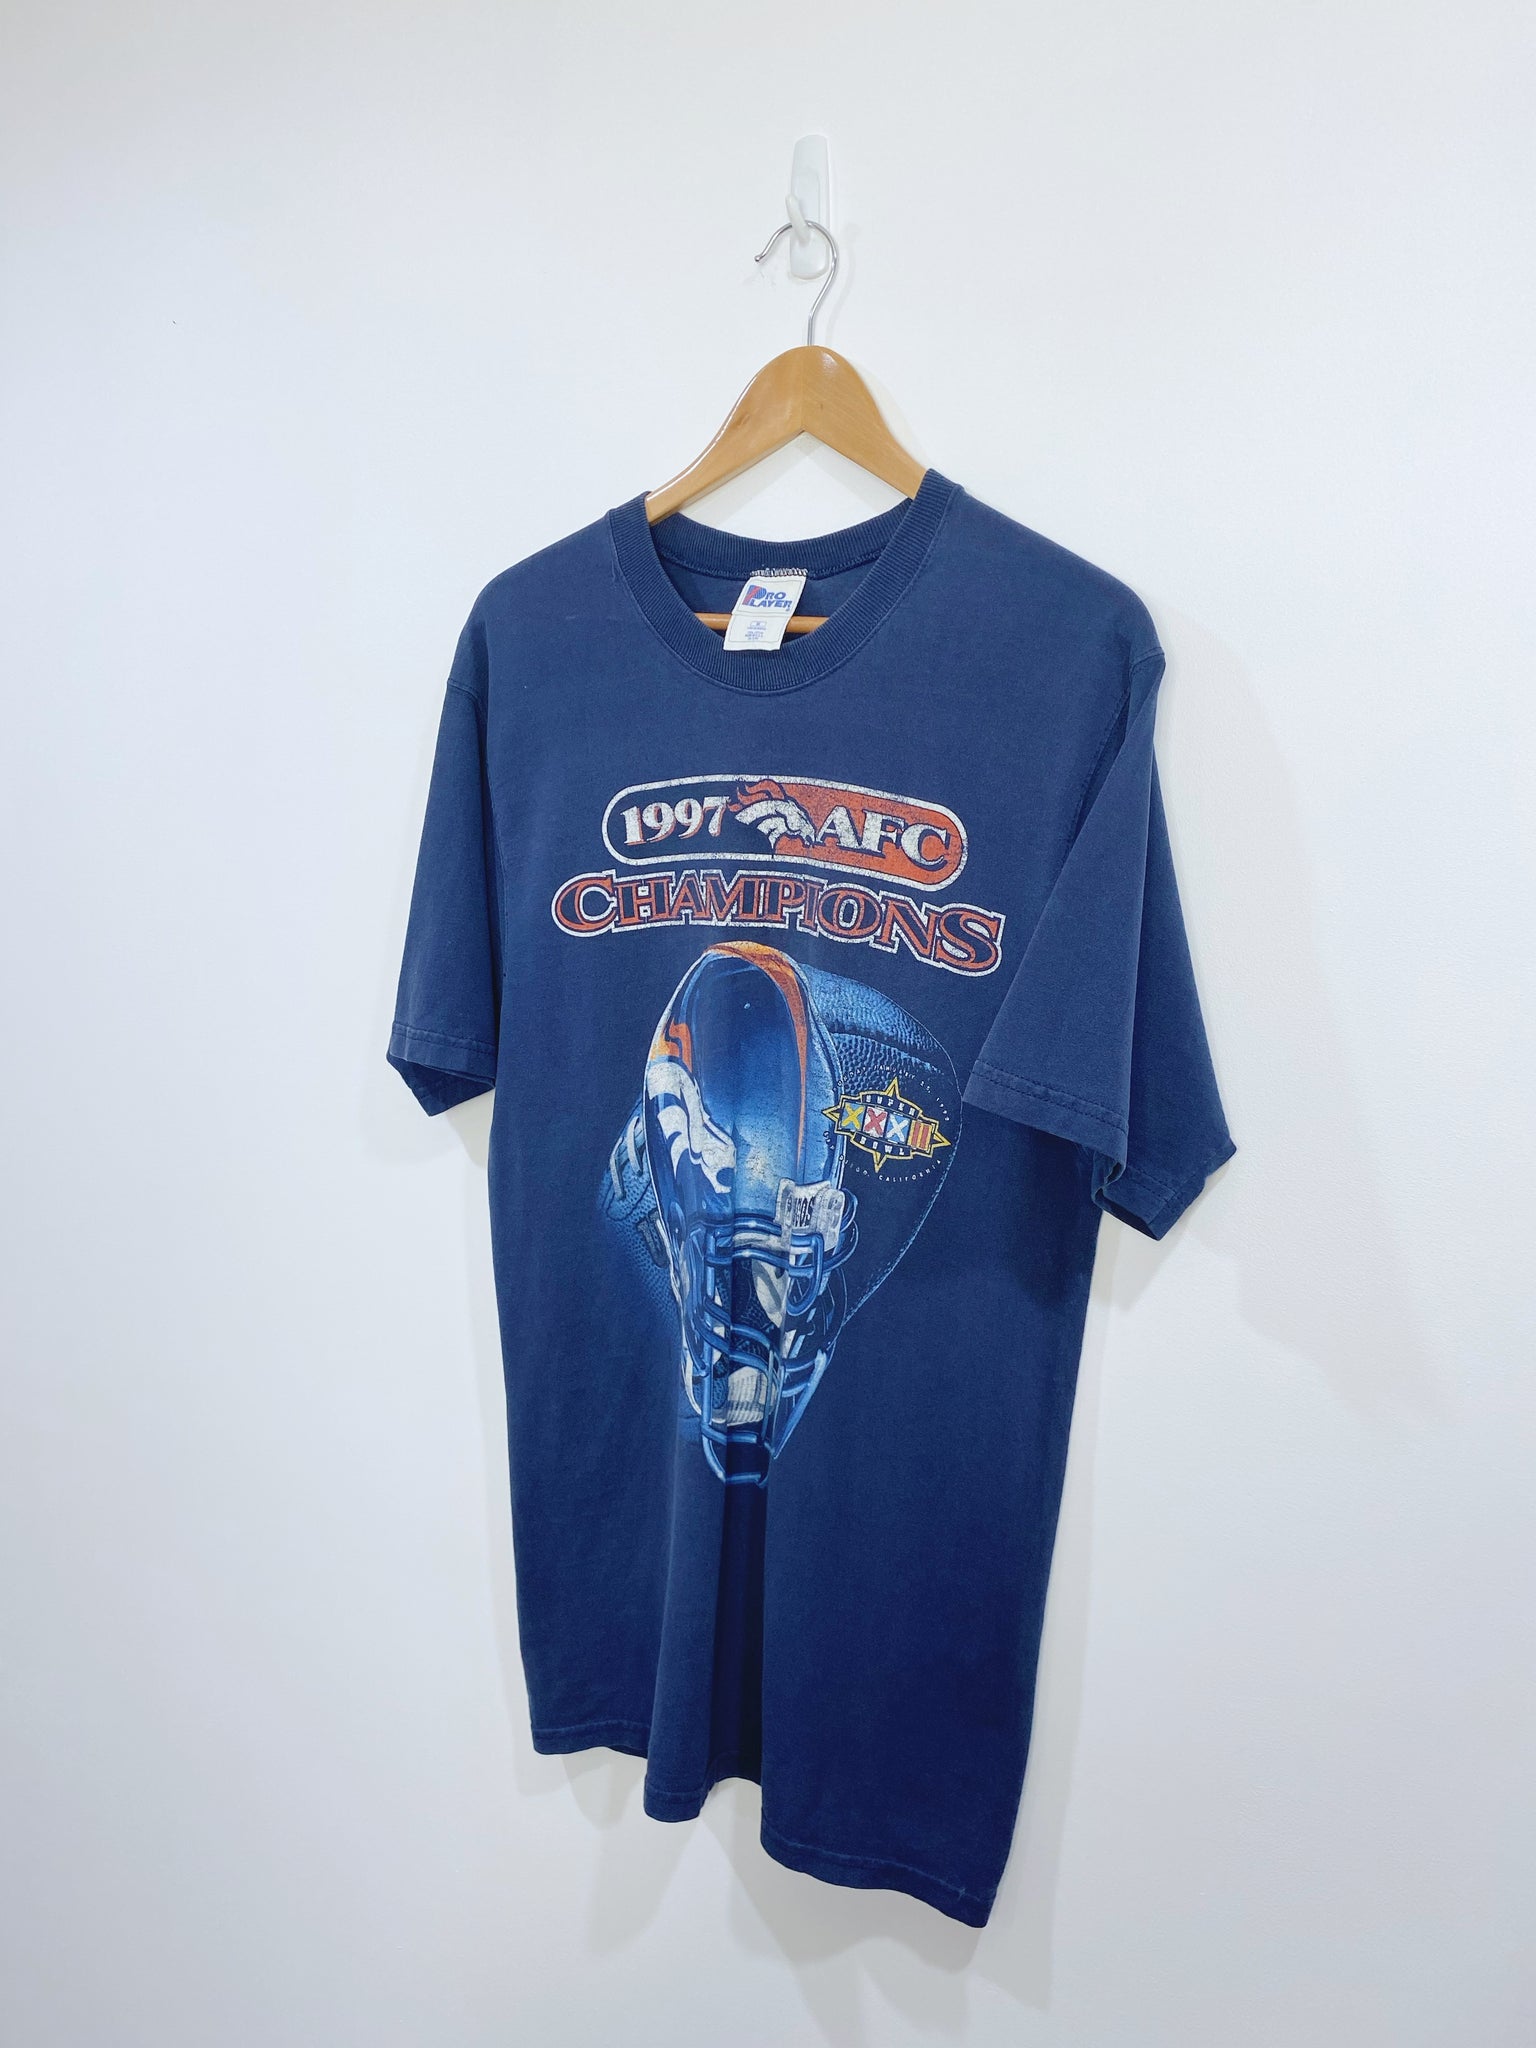 Vintage 1997 Denver Broncos Championship T-shirt M